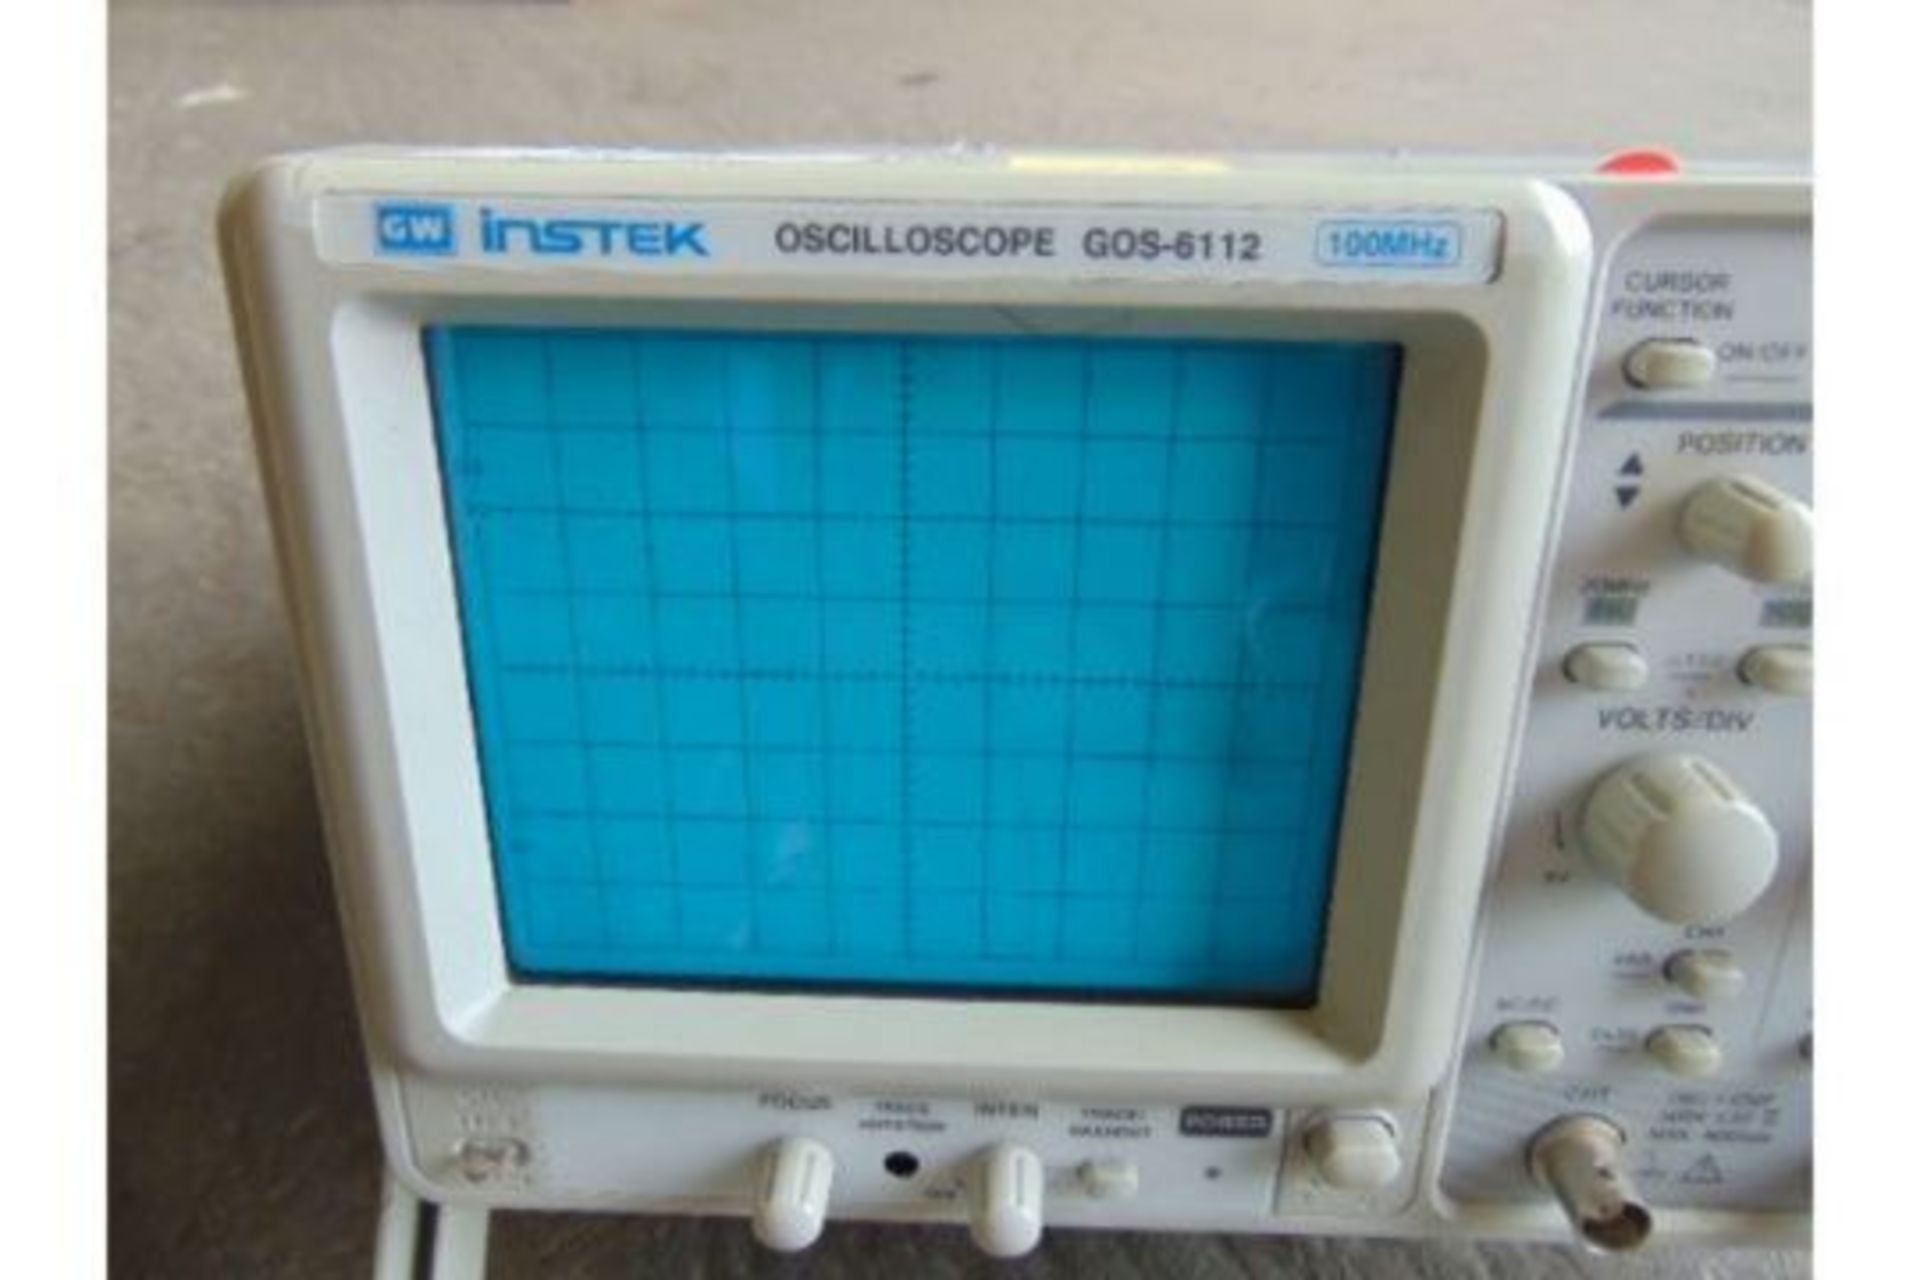 Instek Oscilloscope GOS-6112, 100MHz - Image 3 of 5